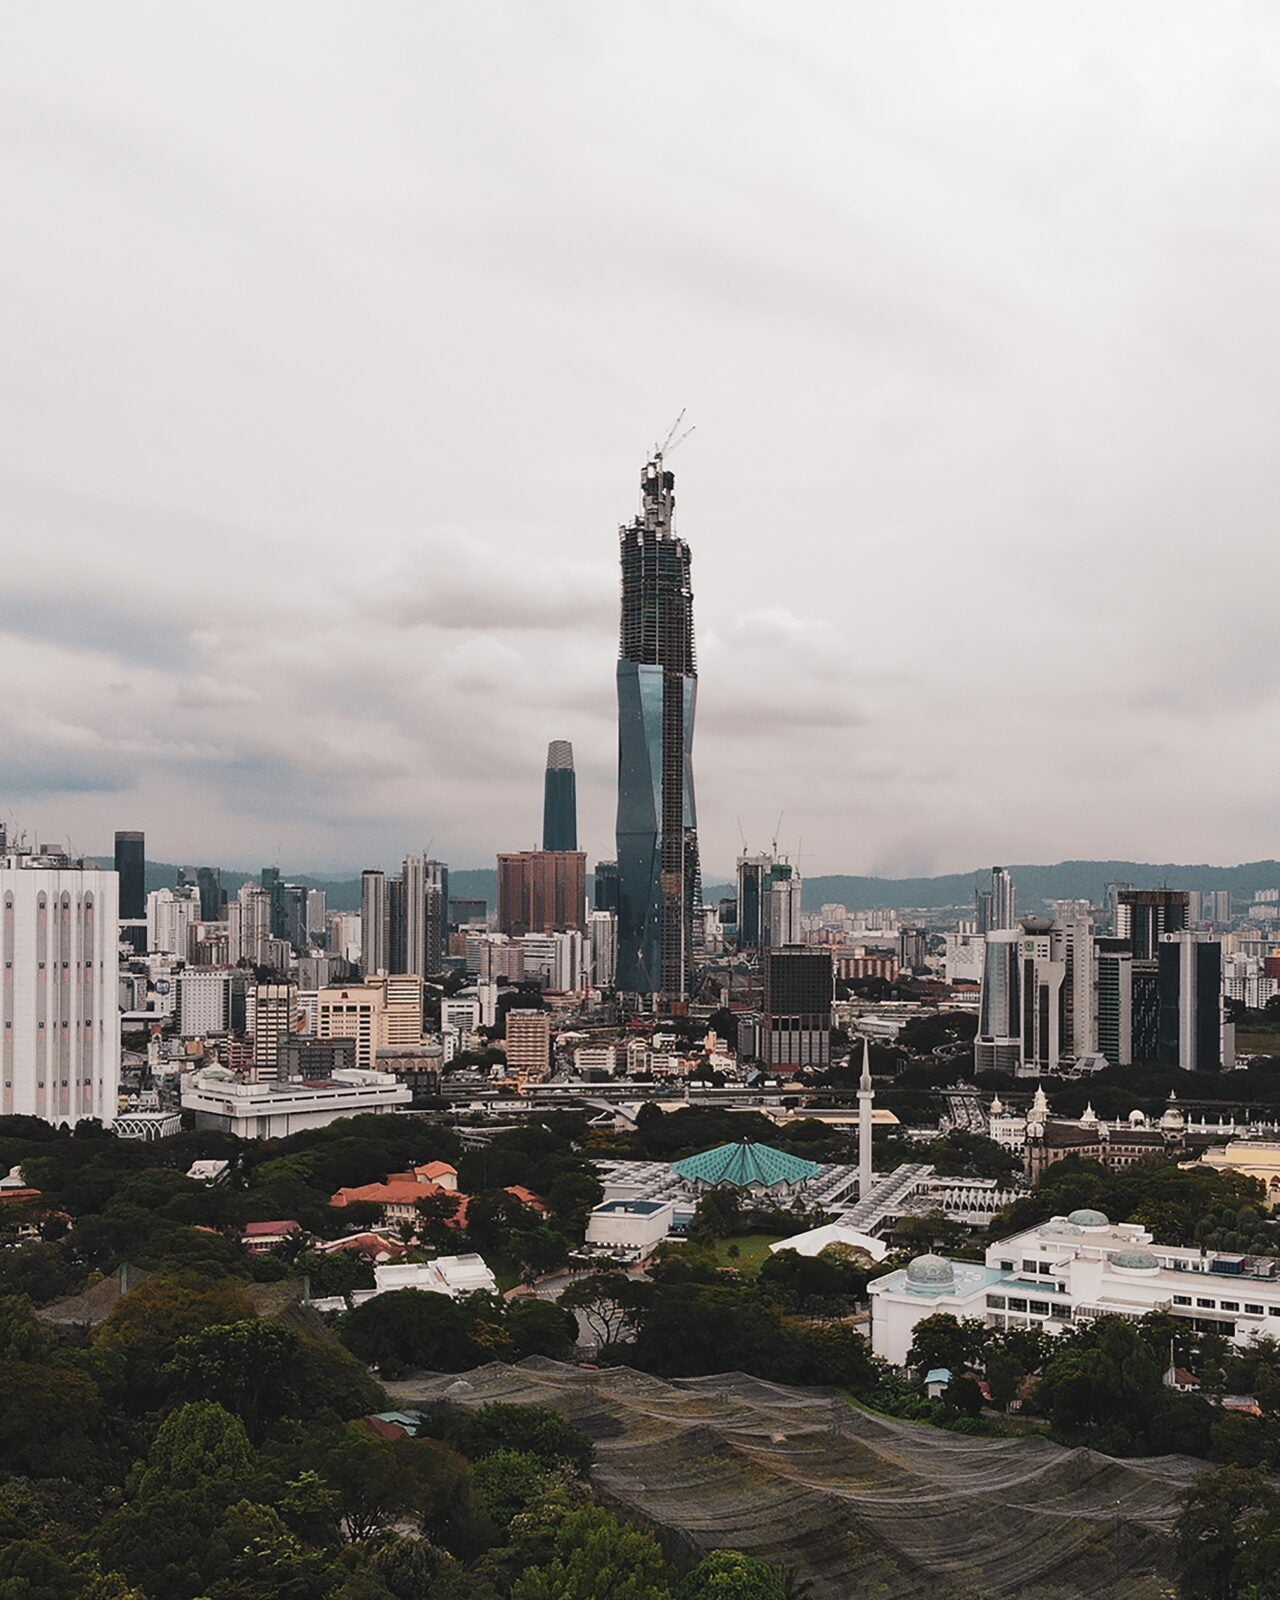 Skyline view of the Merdeka 118 Tower in Kuala Lumpur, Malaysia.